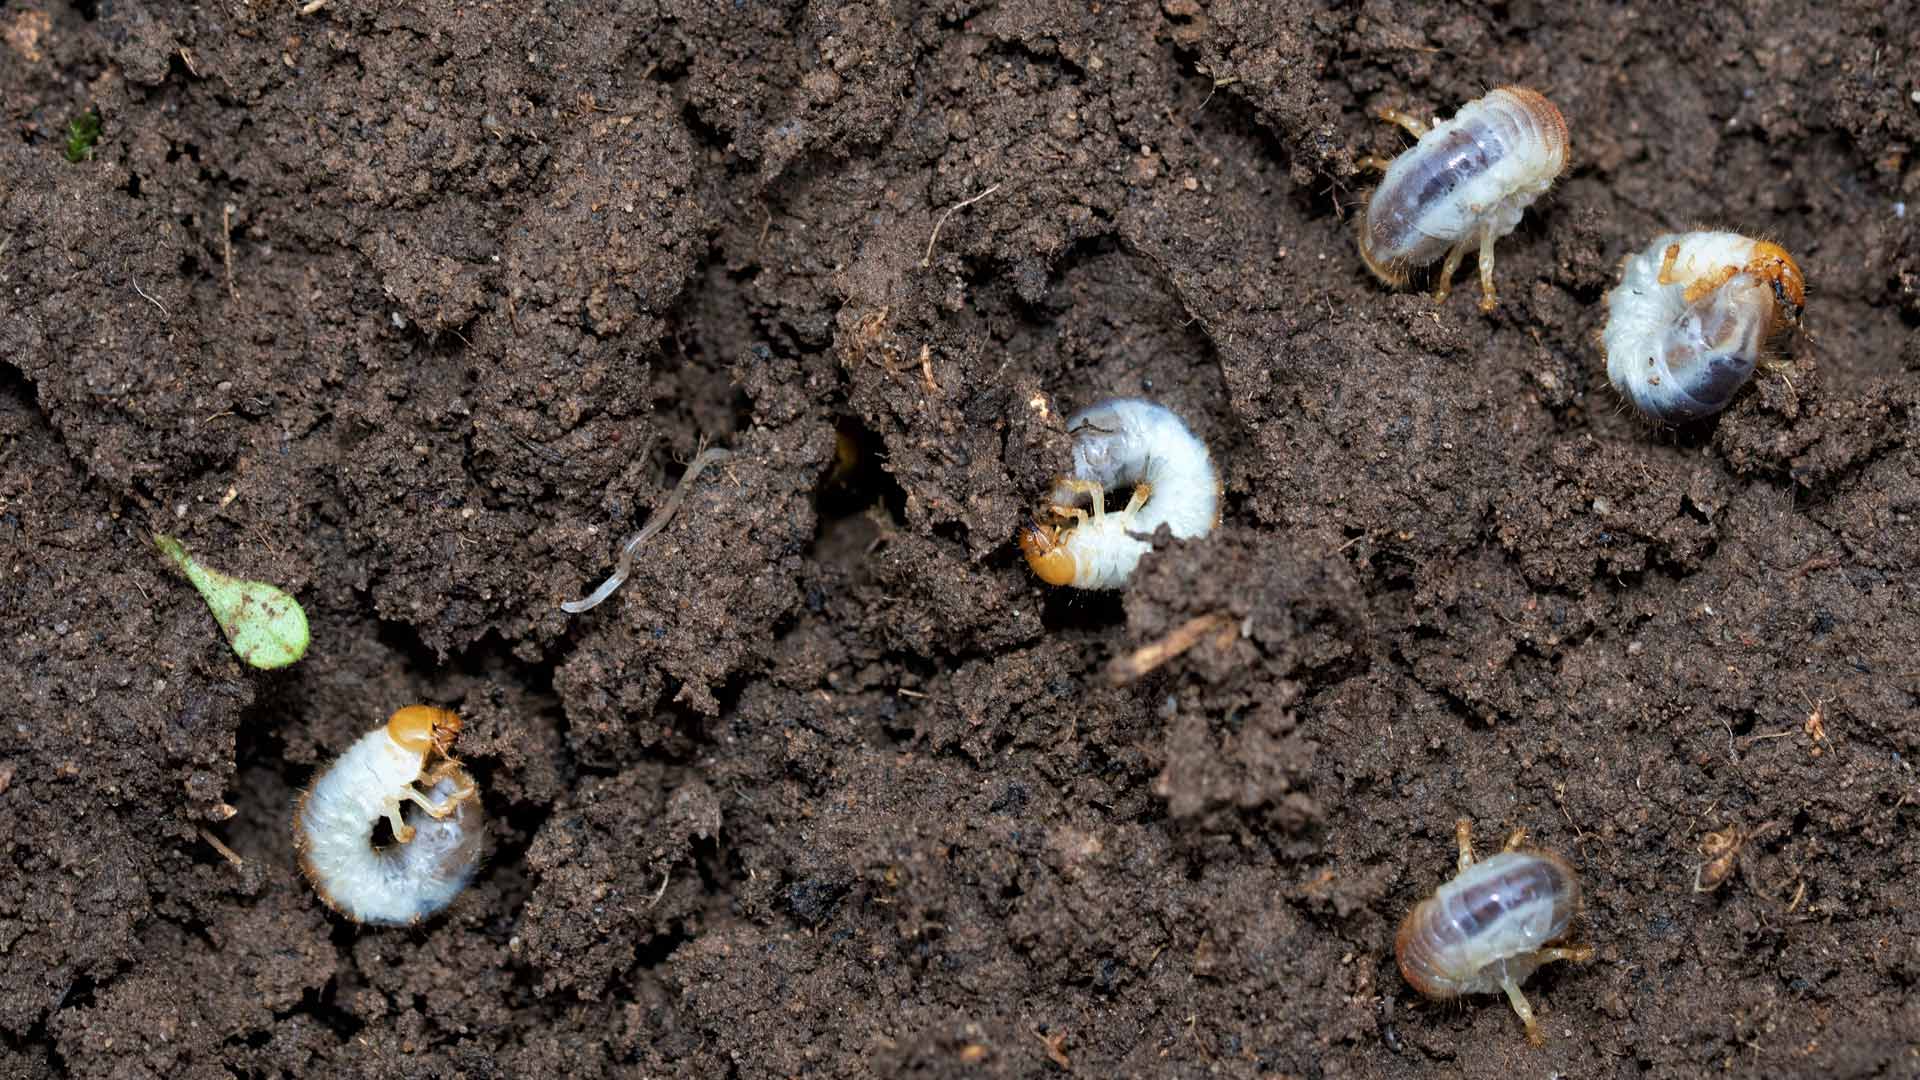 Grub infestation found in a lawn's soil in Waco, TX.